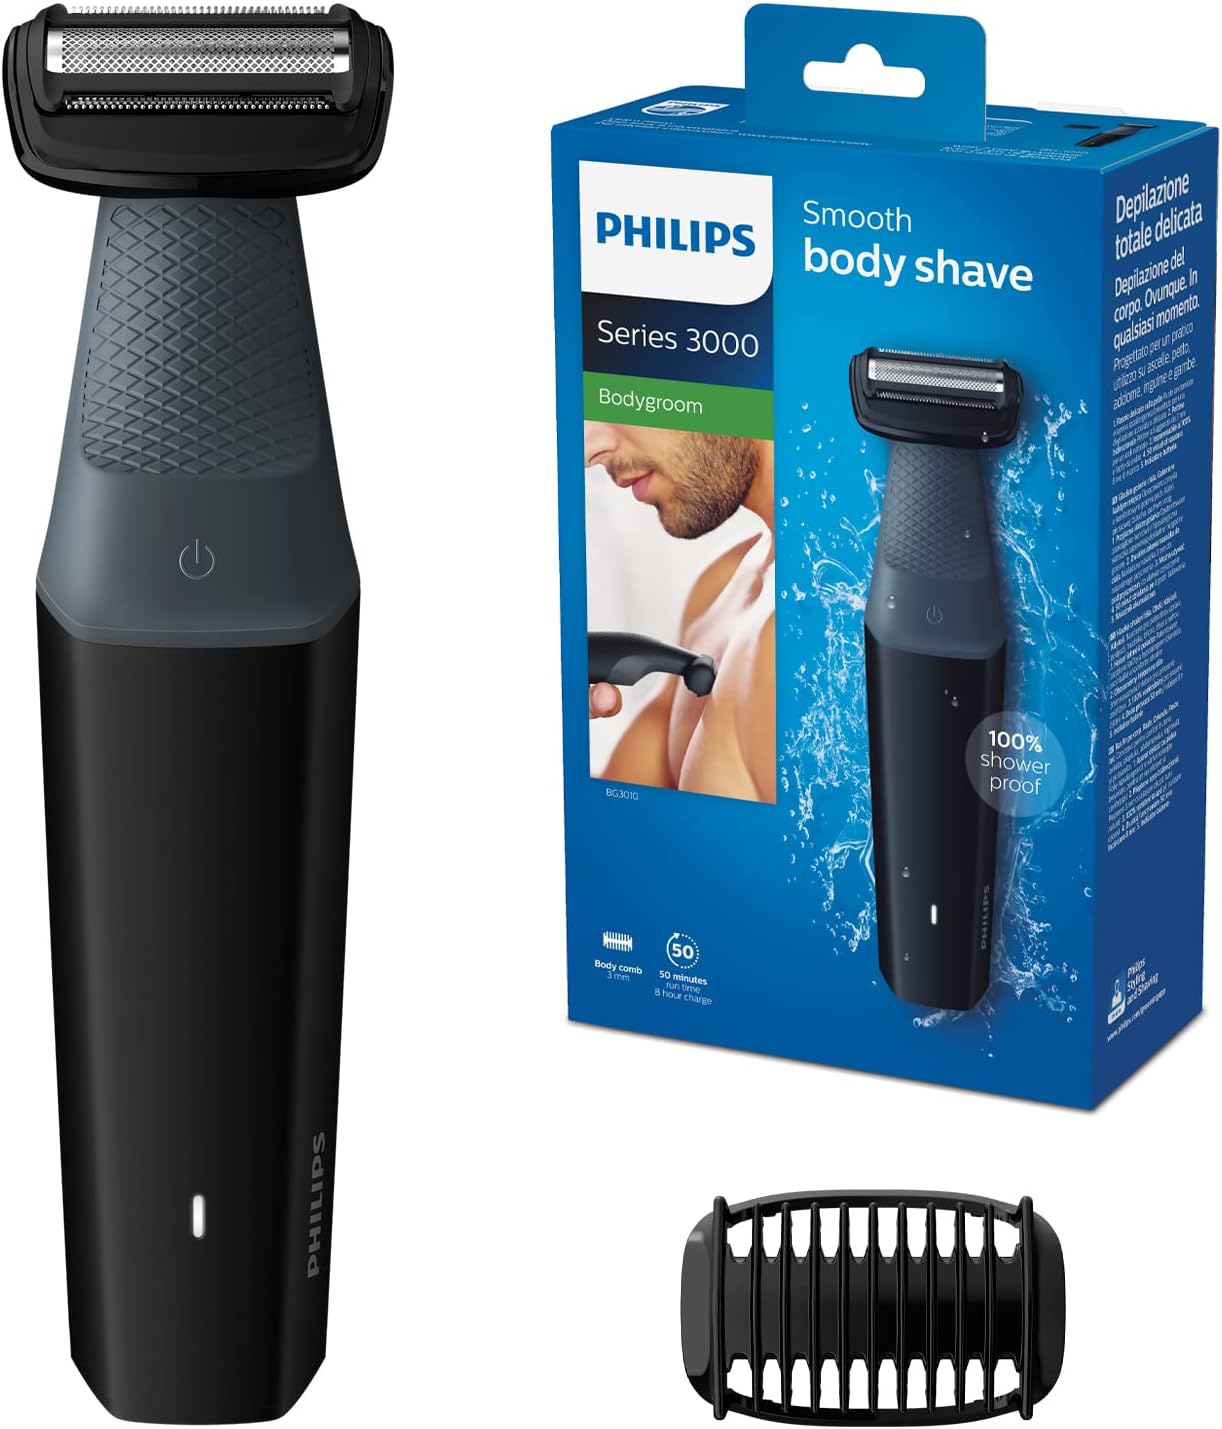 Philips Serie 3000 BG3010/15 - Afeitadora corporal apta para la ducha